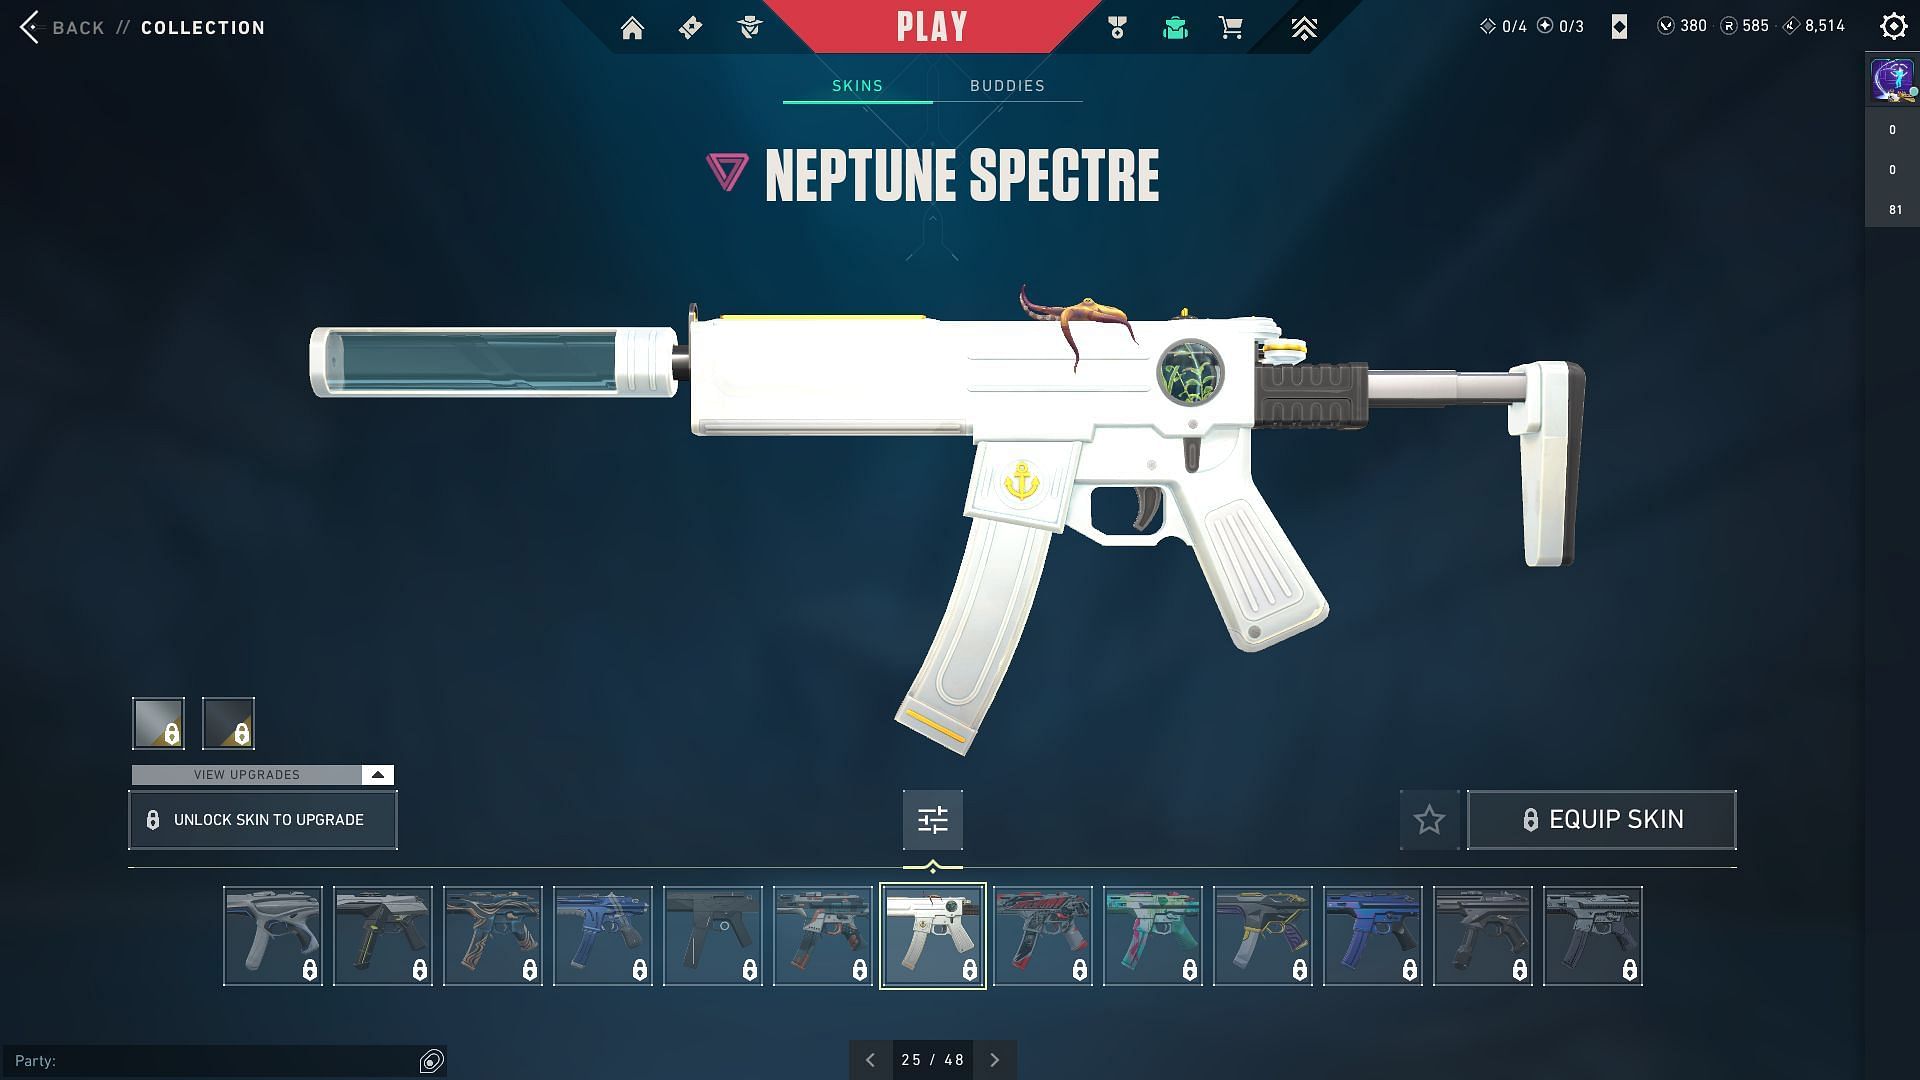 Neptune Spectre (Image via Riot Games)